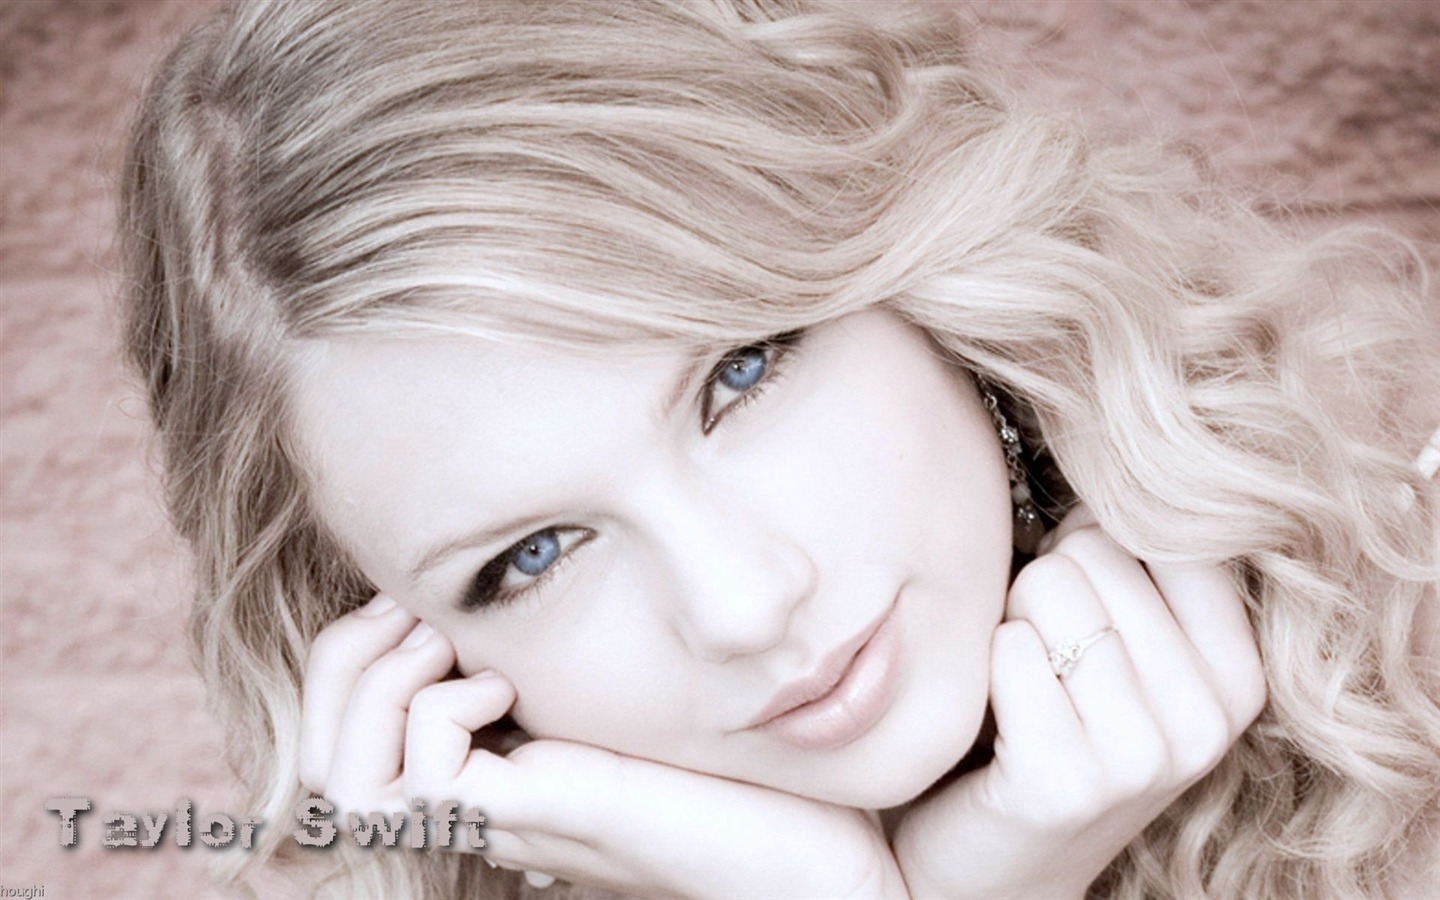 Taylor Swift 泰勒·斯威芙特 美女壁纸3 - 1440x900